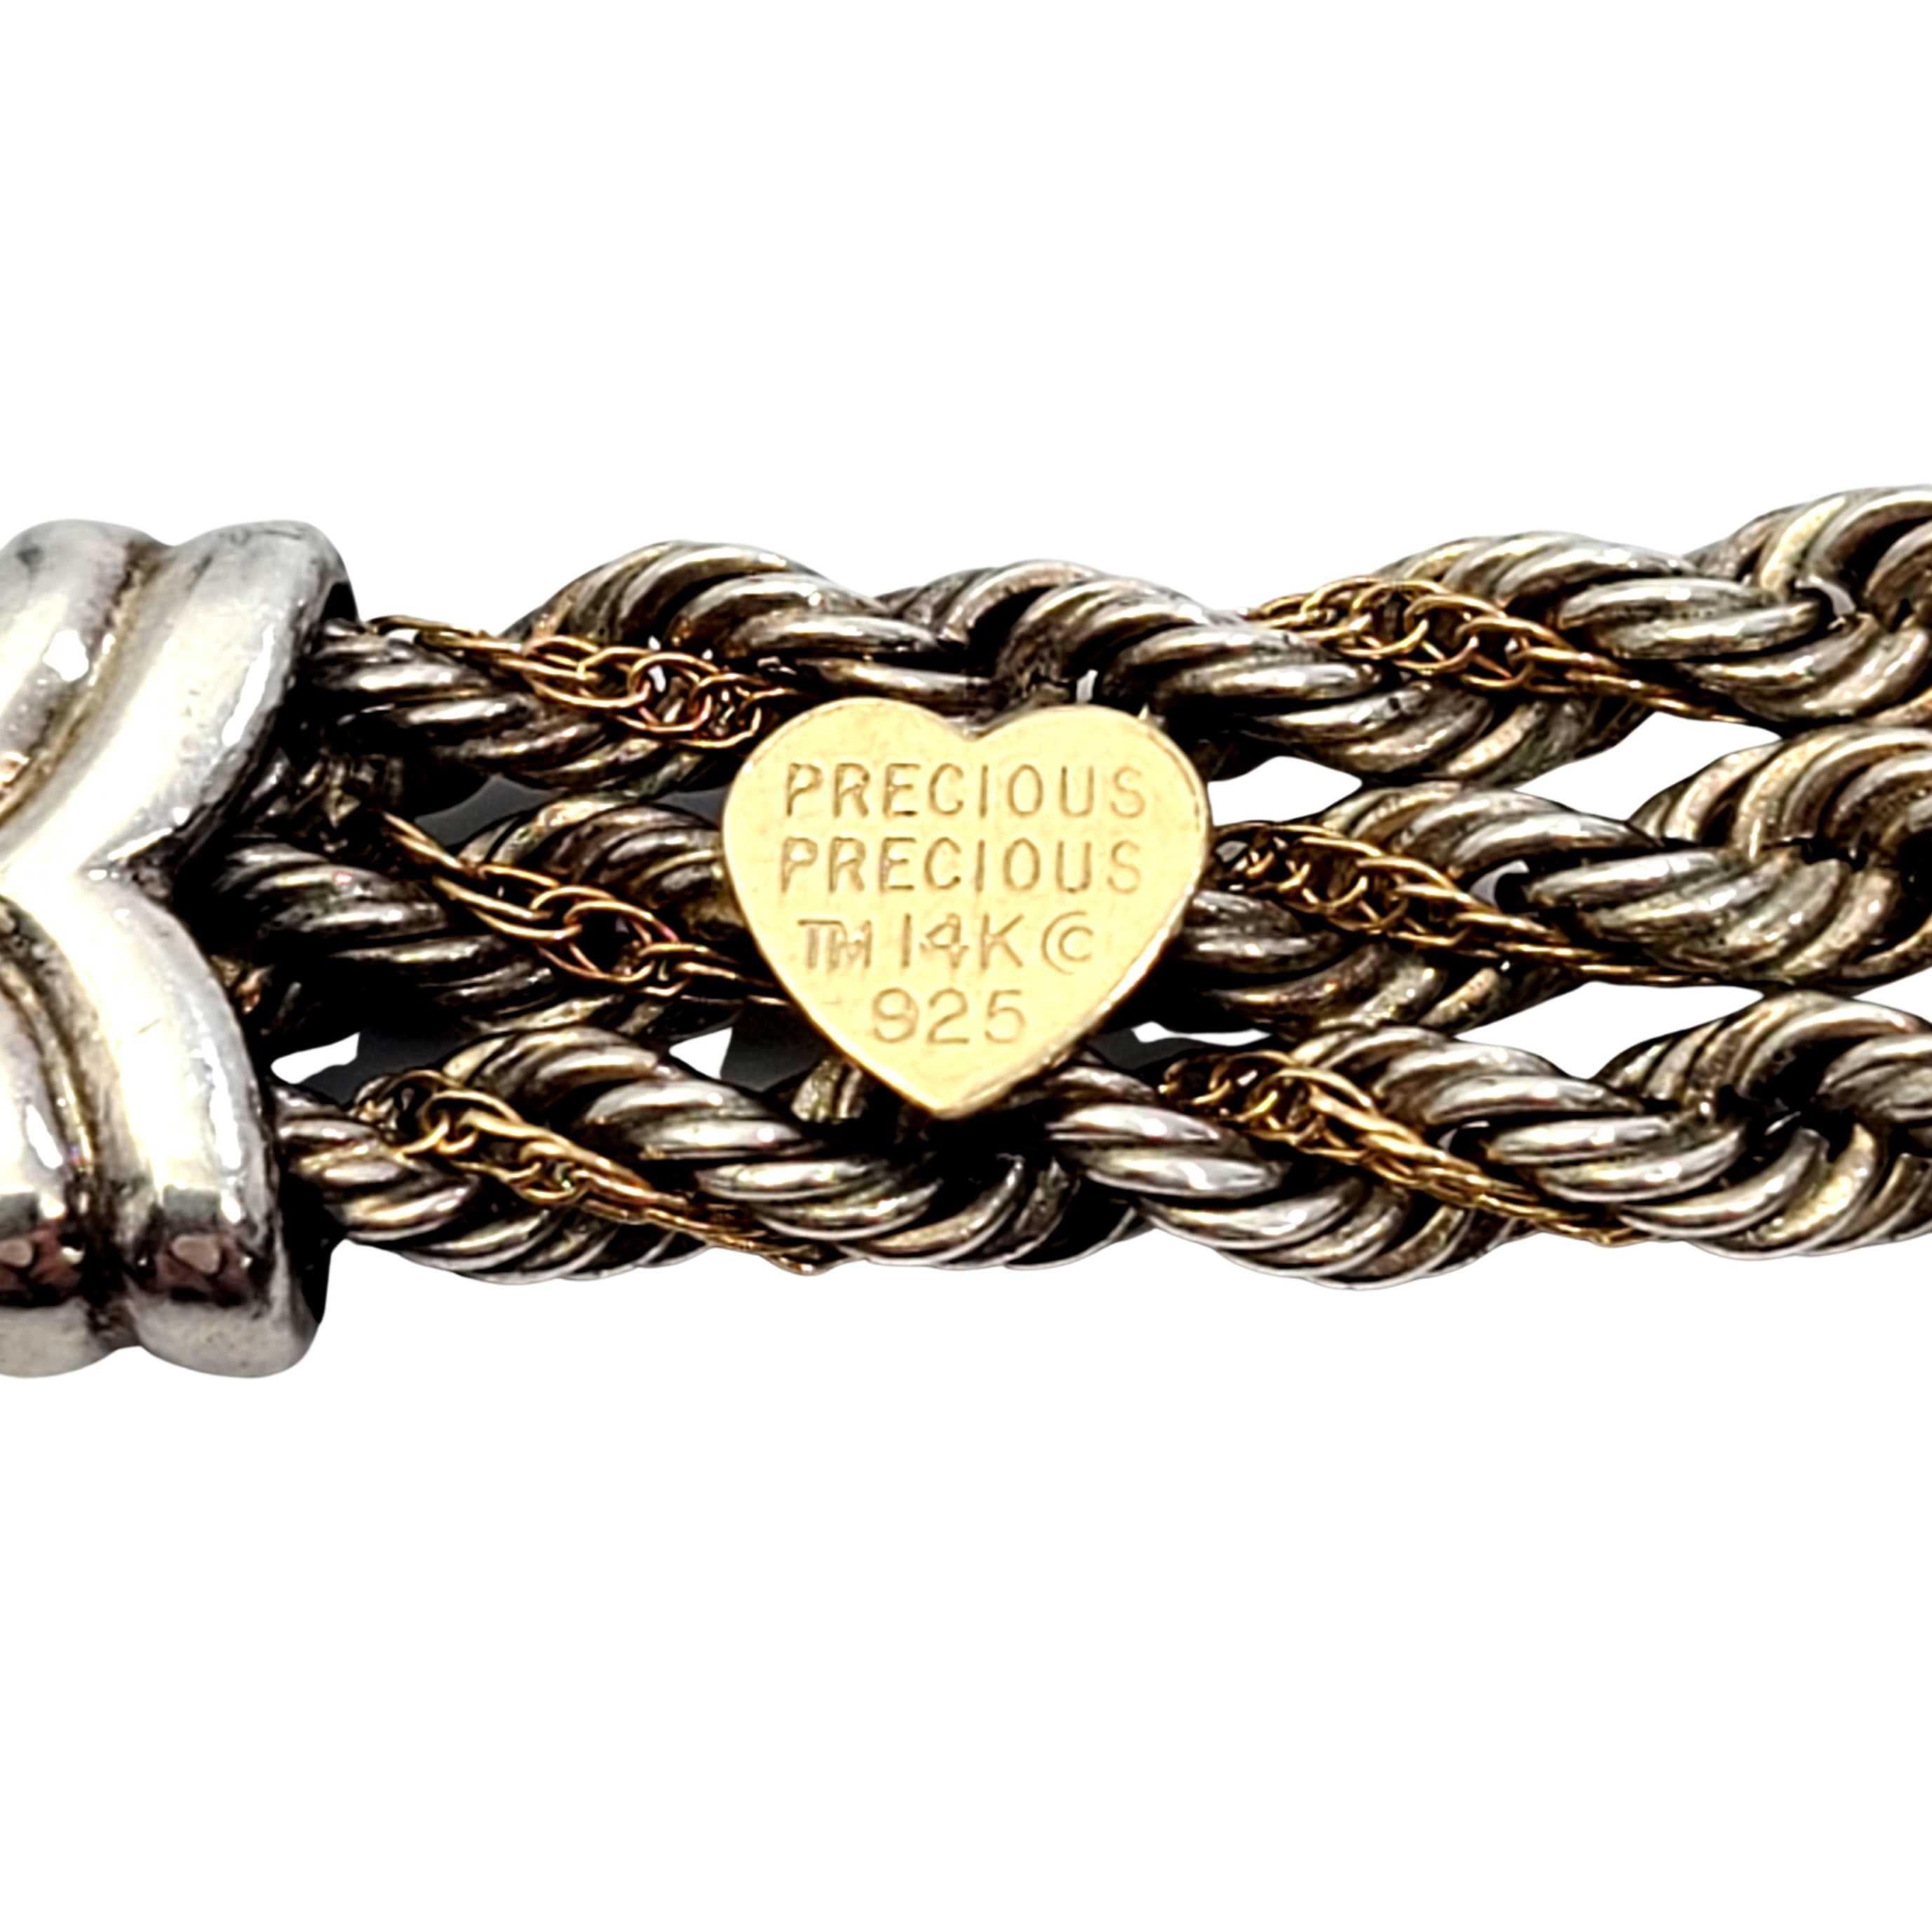 Precious Precious Sterling Silver and 14K Yellow Gold Three Strand Rope Bracelet 2